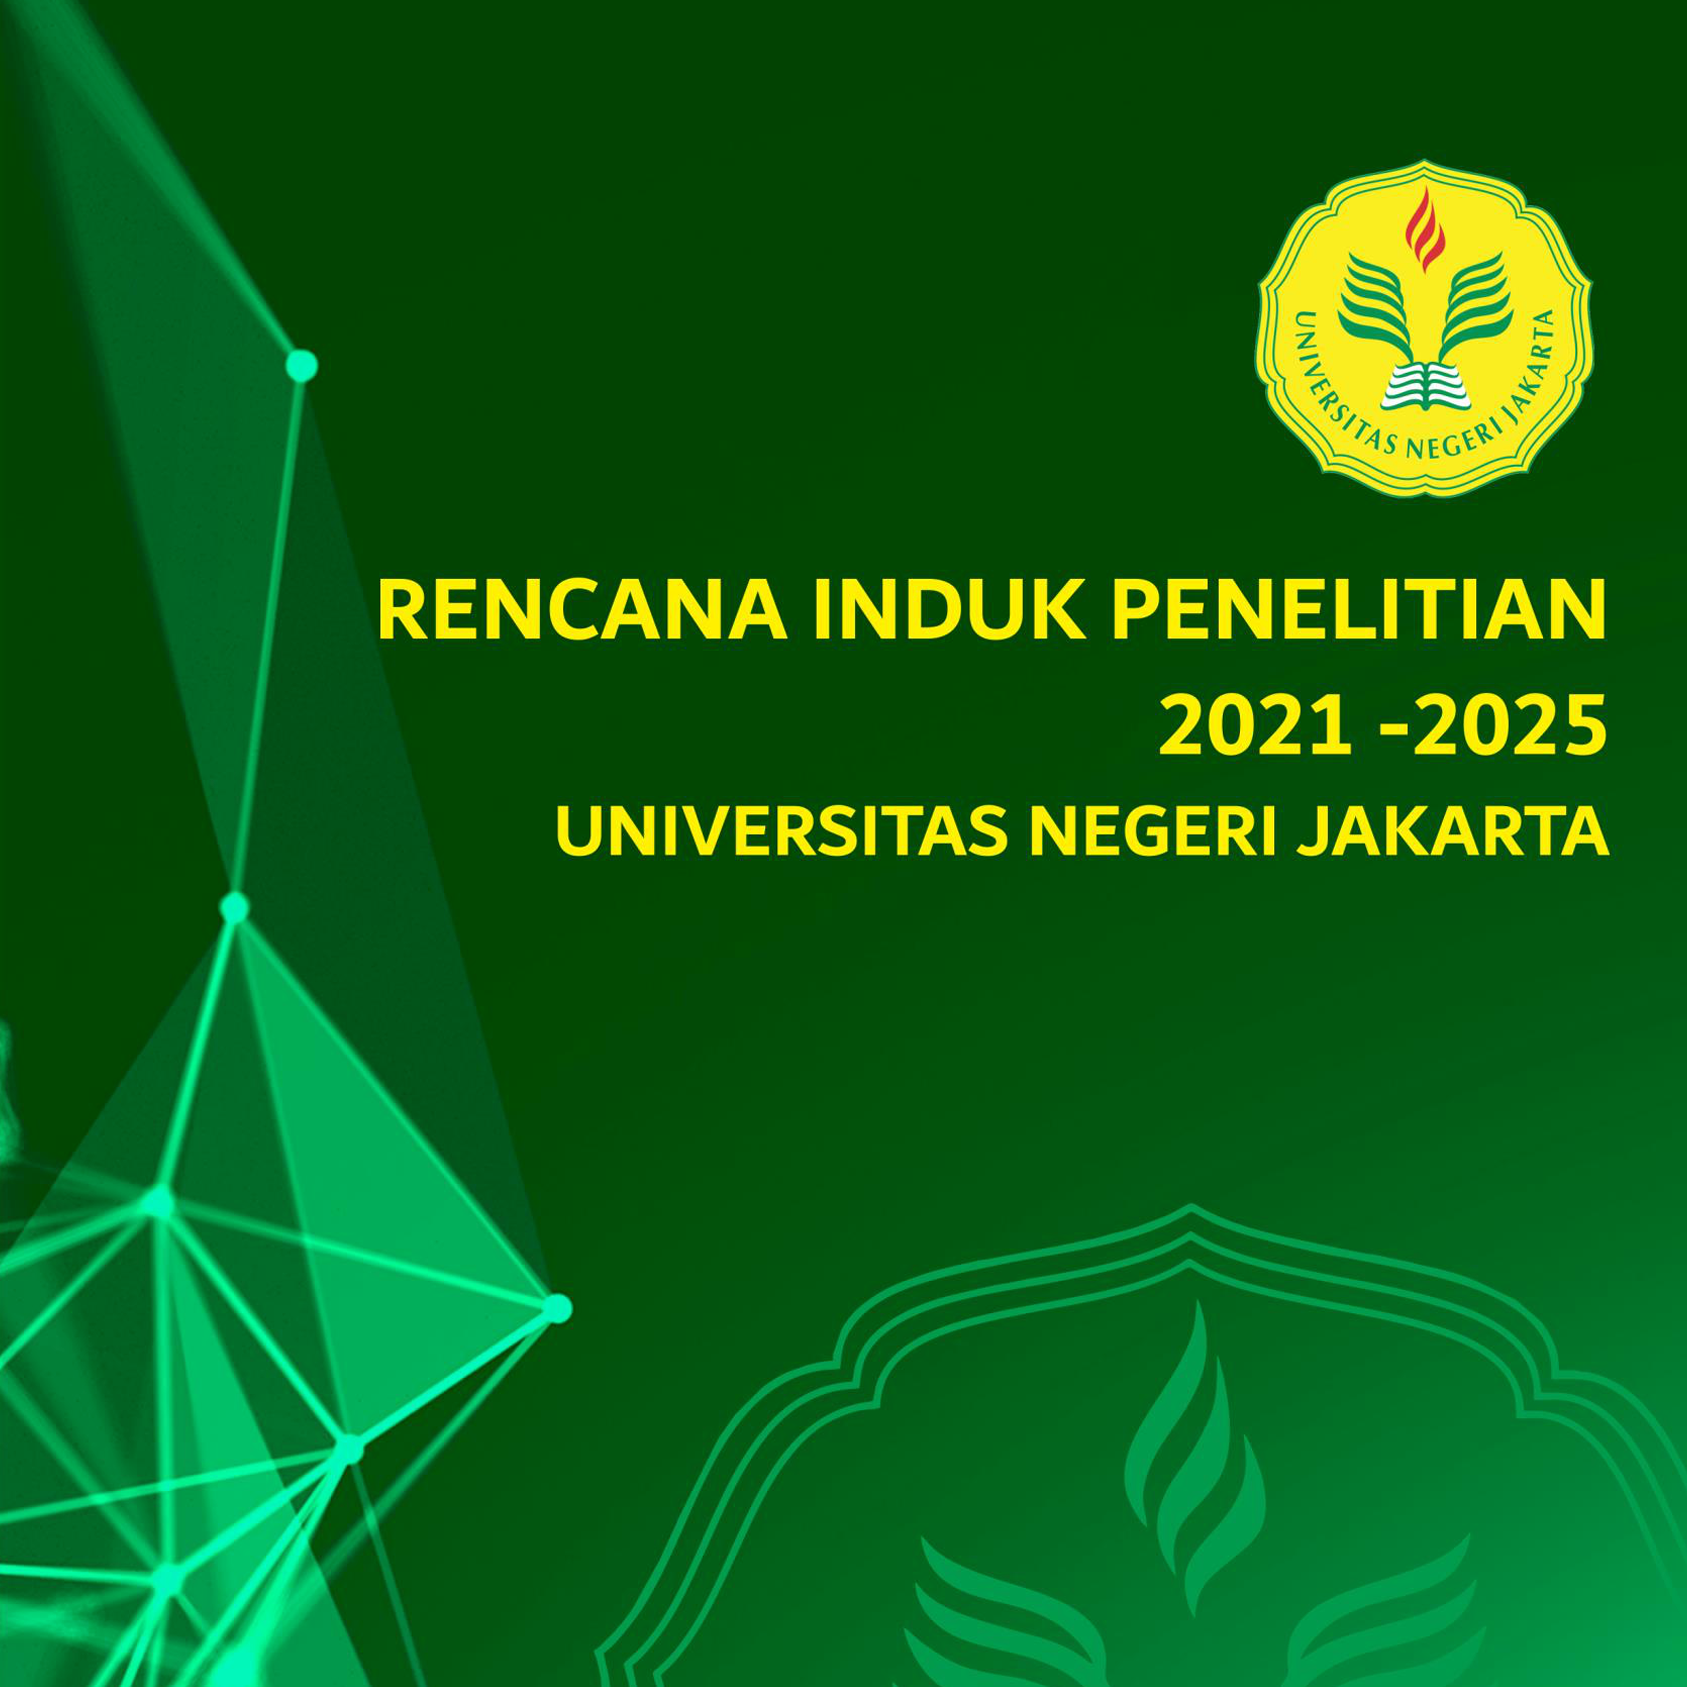 Rencana Induk Penelitian 2021-2025 Universitas Negeri Jakarta